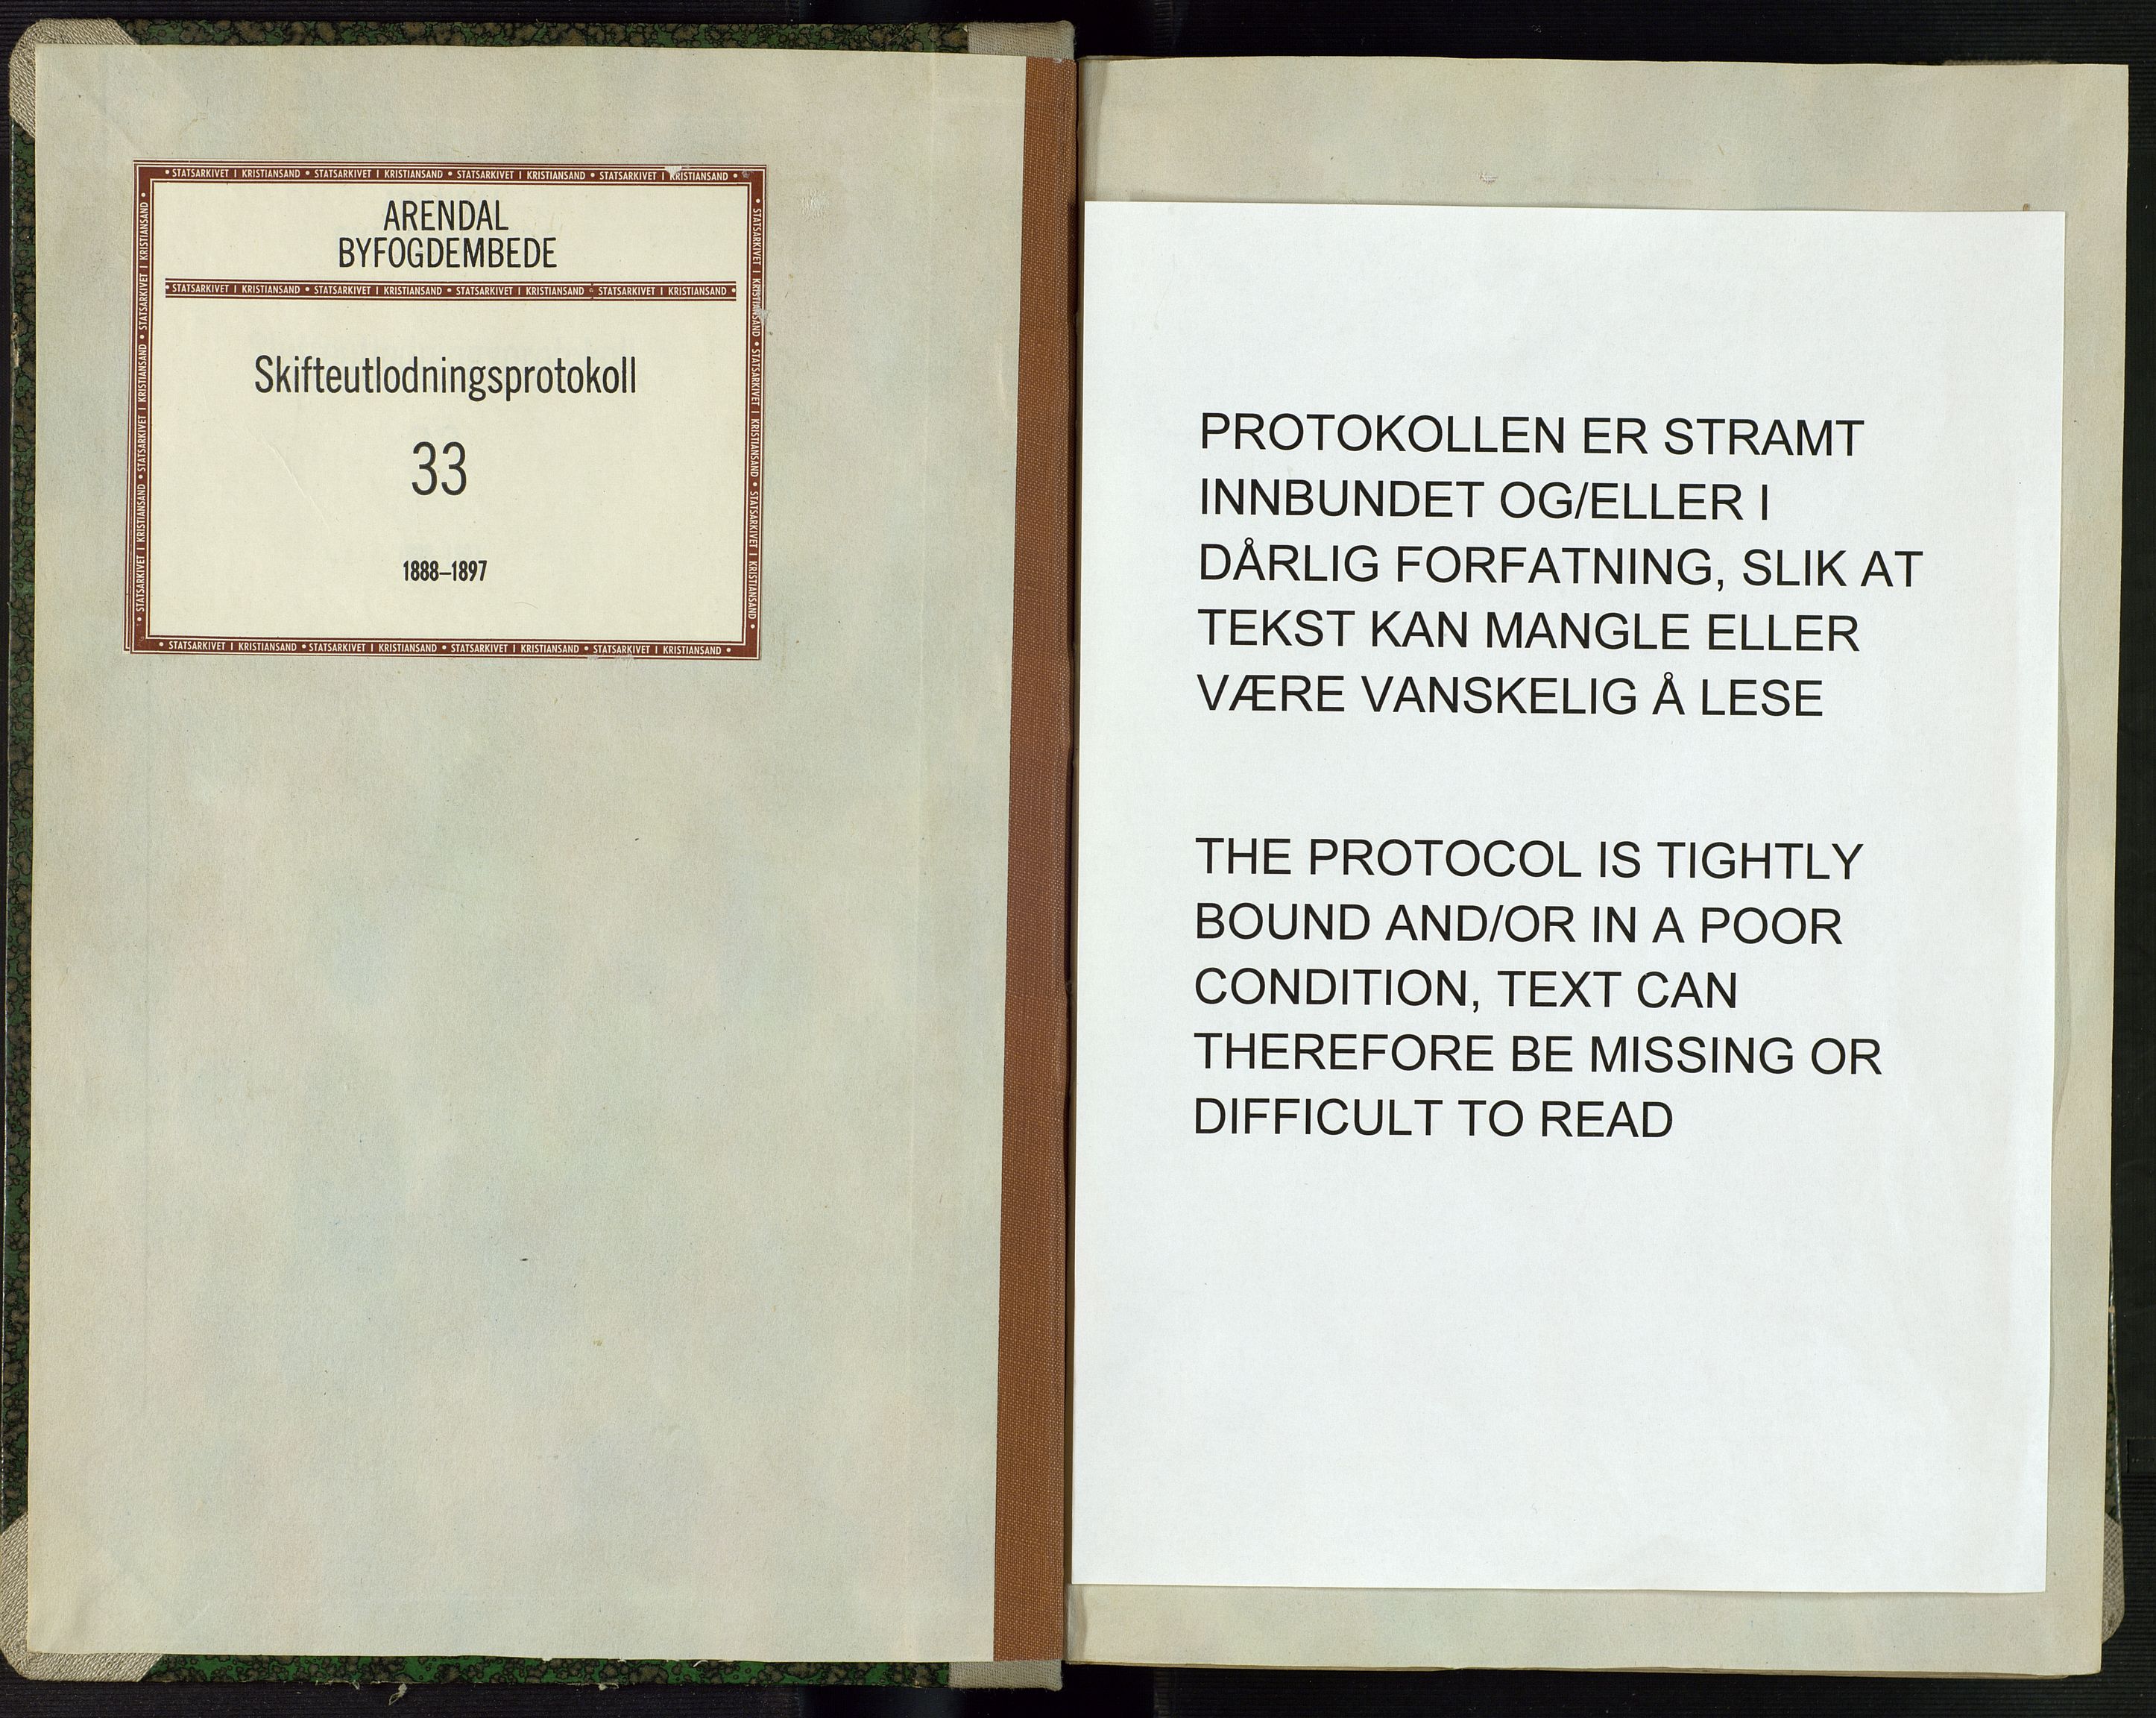 Arendal byfogd, SAK/1222-0001/H/Hc/L0035: Skifteutlodningsprotokoll nr. 33, 1888-1897